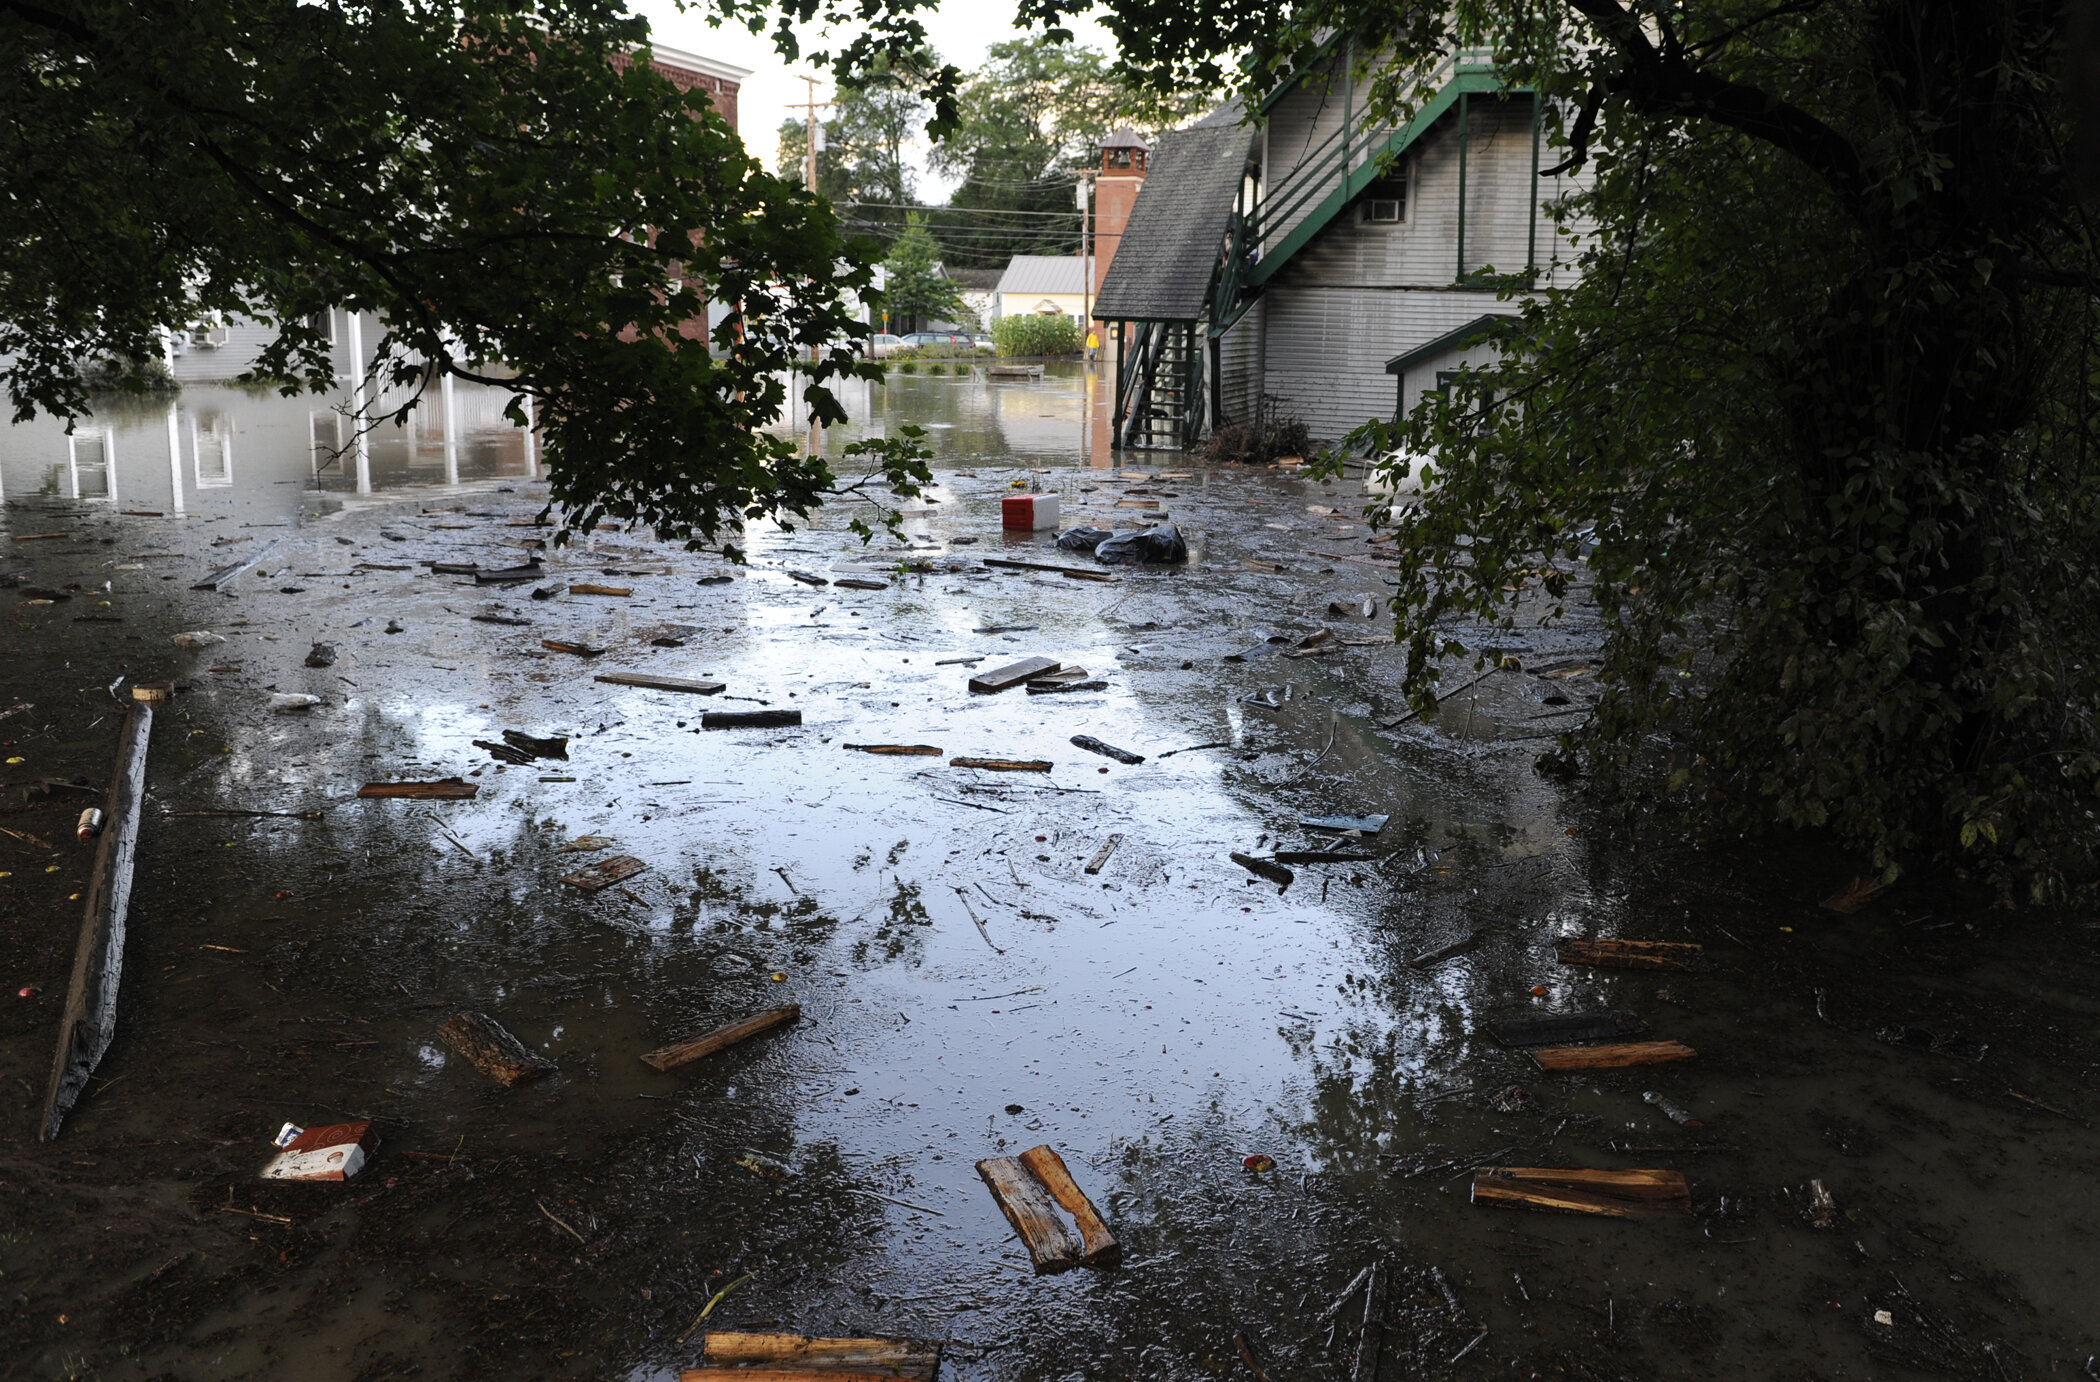  Properties along Main Street were water-logged. Photo by Gordon Miller 